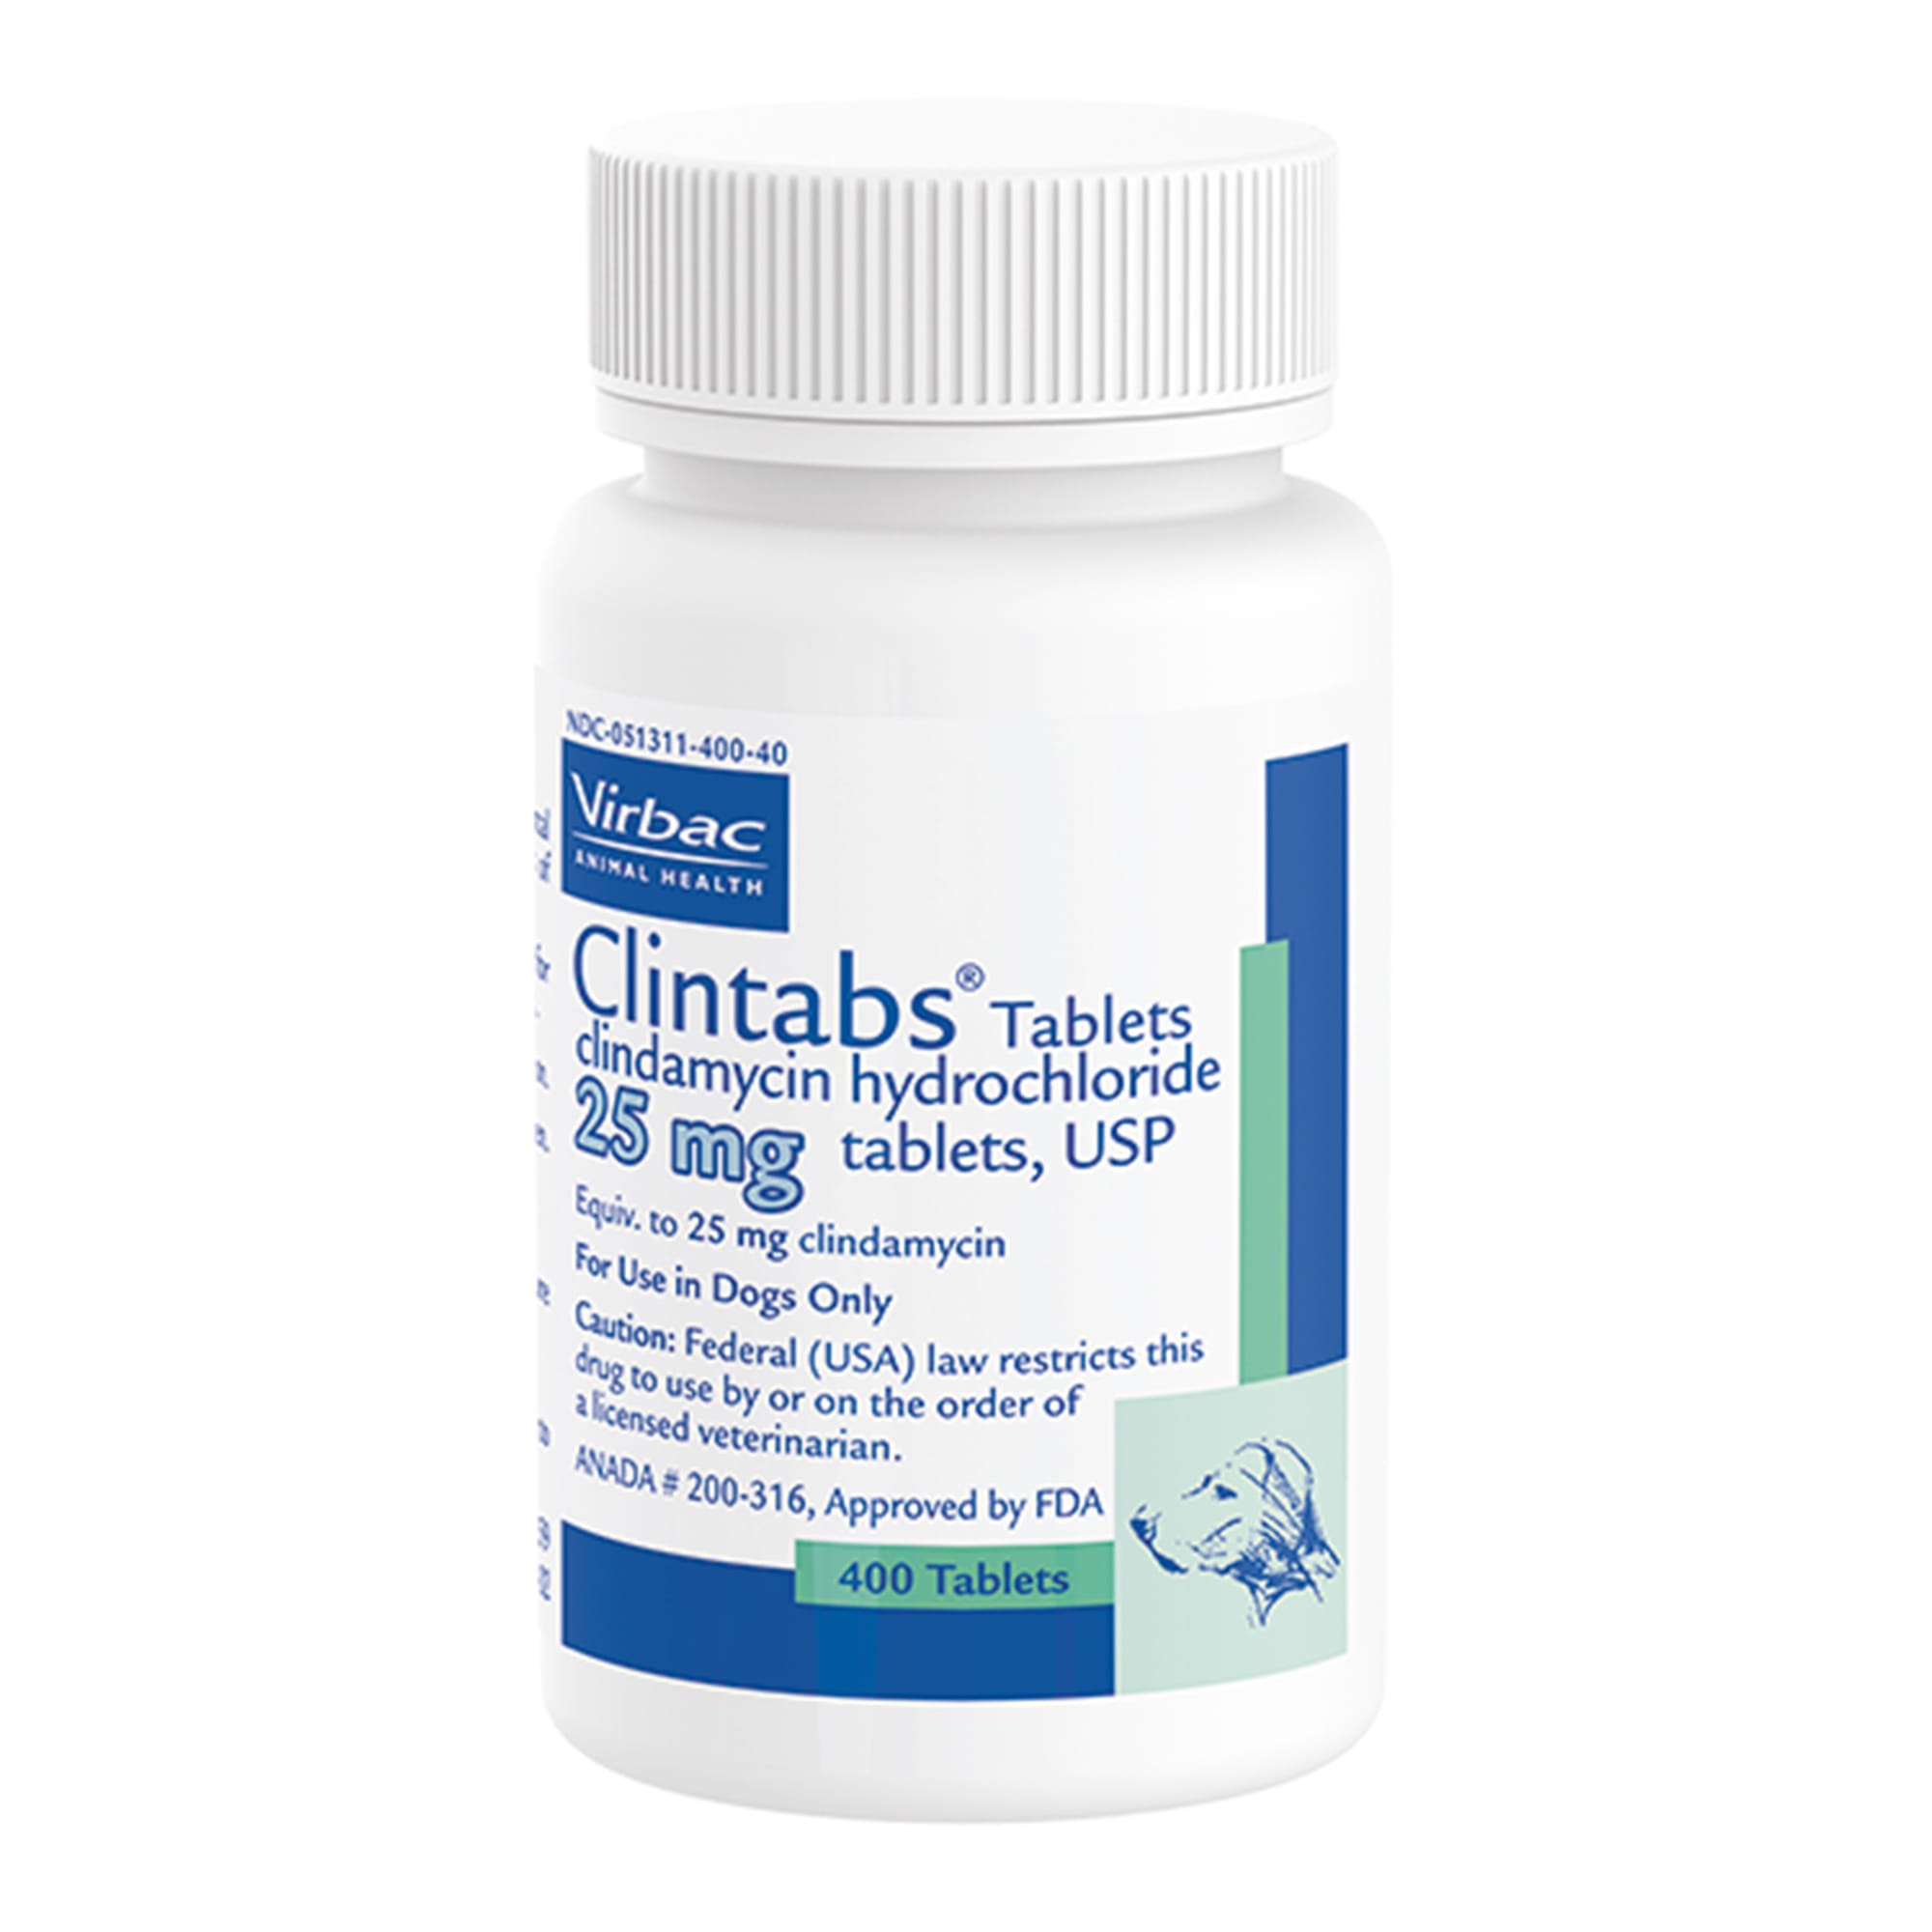 Clindamycin (ClinTabs) 25 mg, Single Tablet